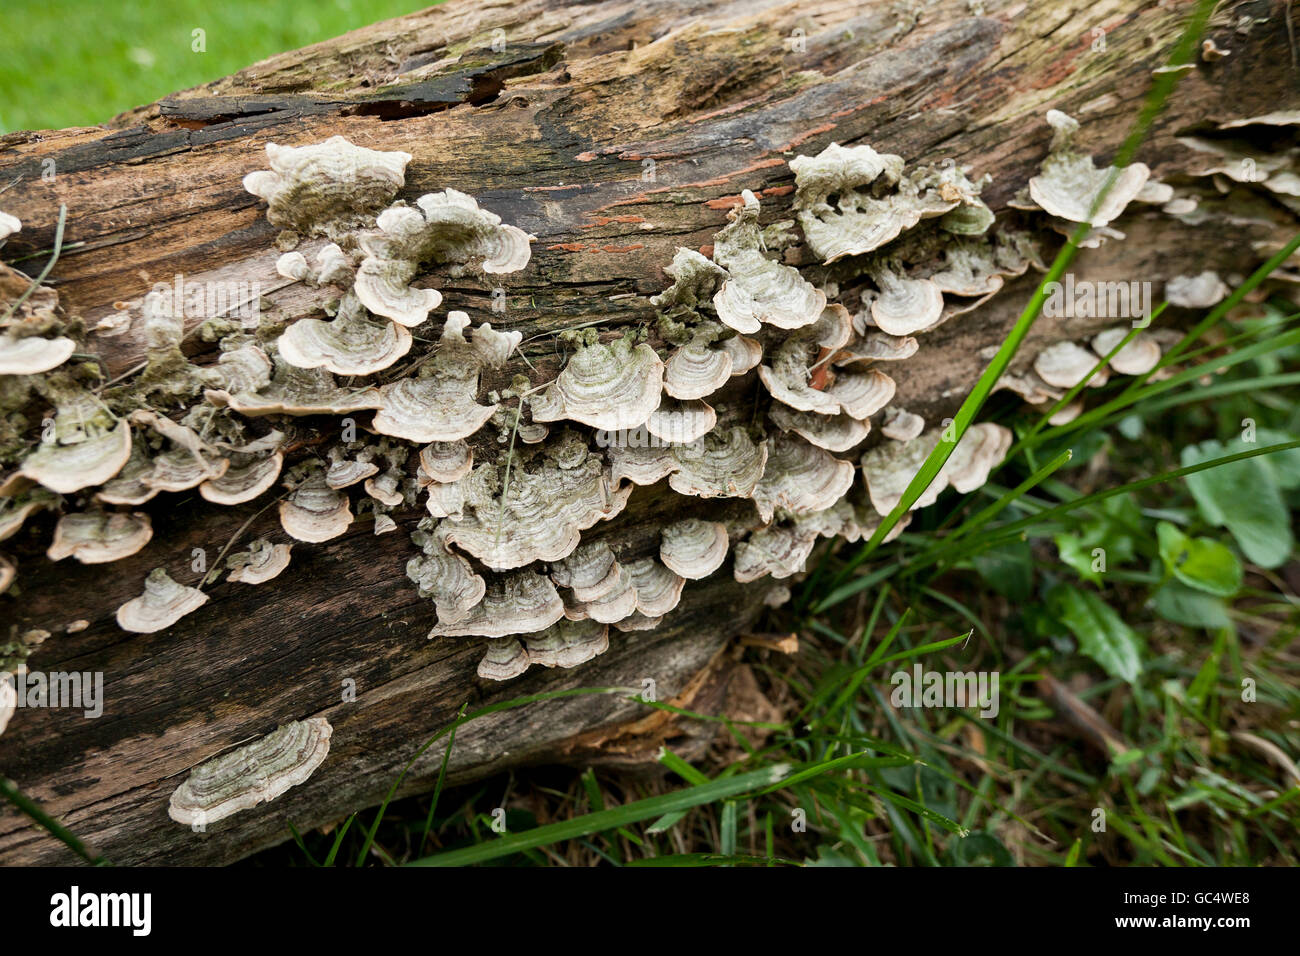 Tree fungi Turkeytail mushrooms (Trametes versicolor) growing on decaying tree trunk - USA Stock Photo